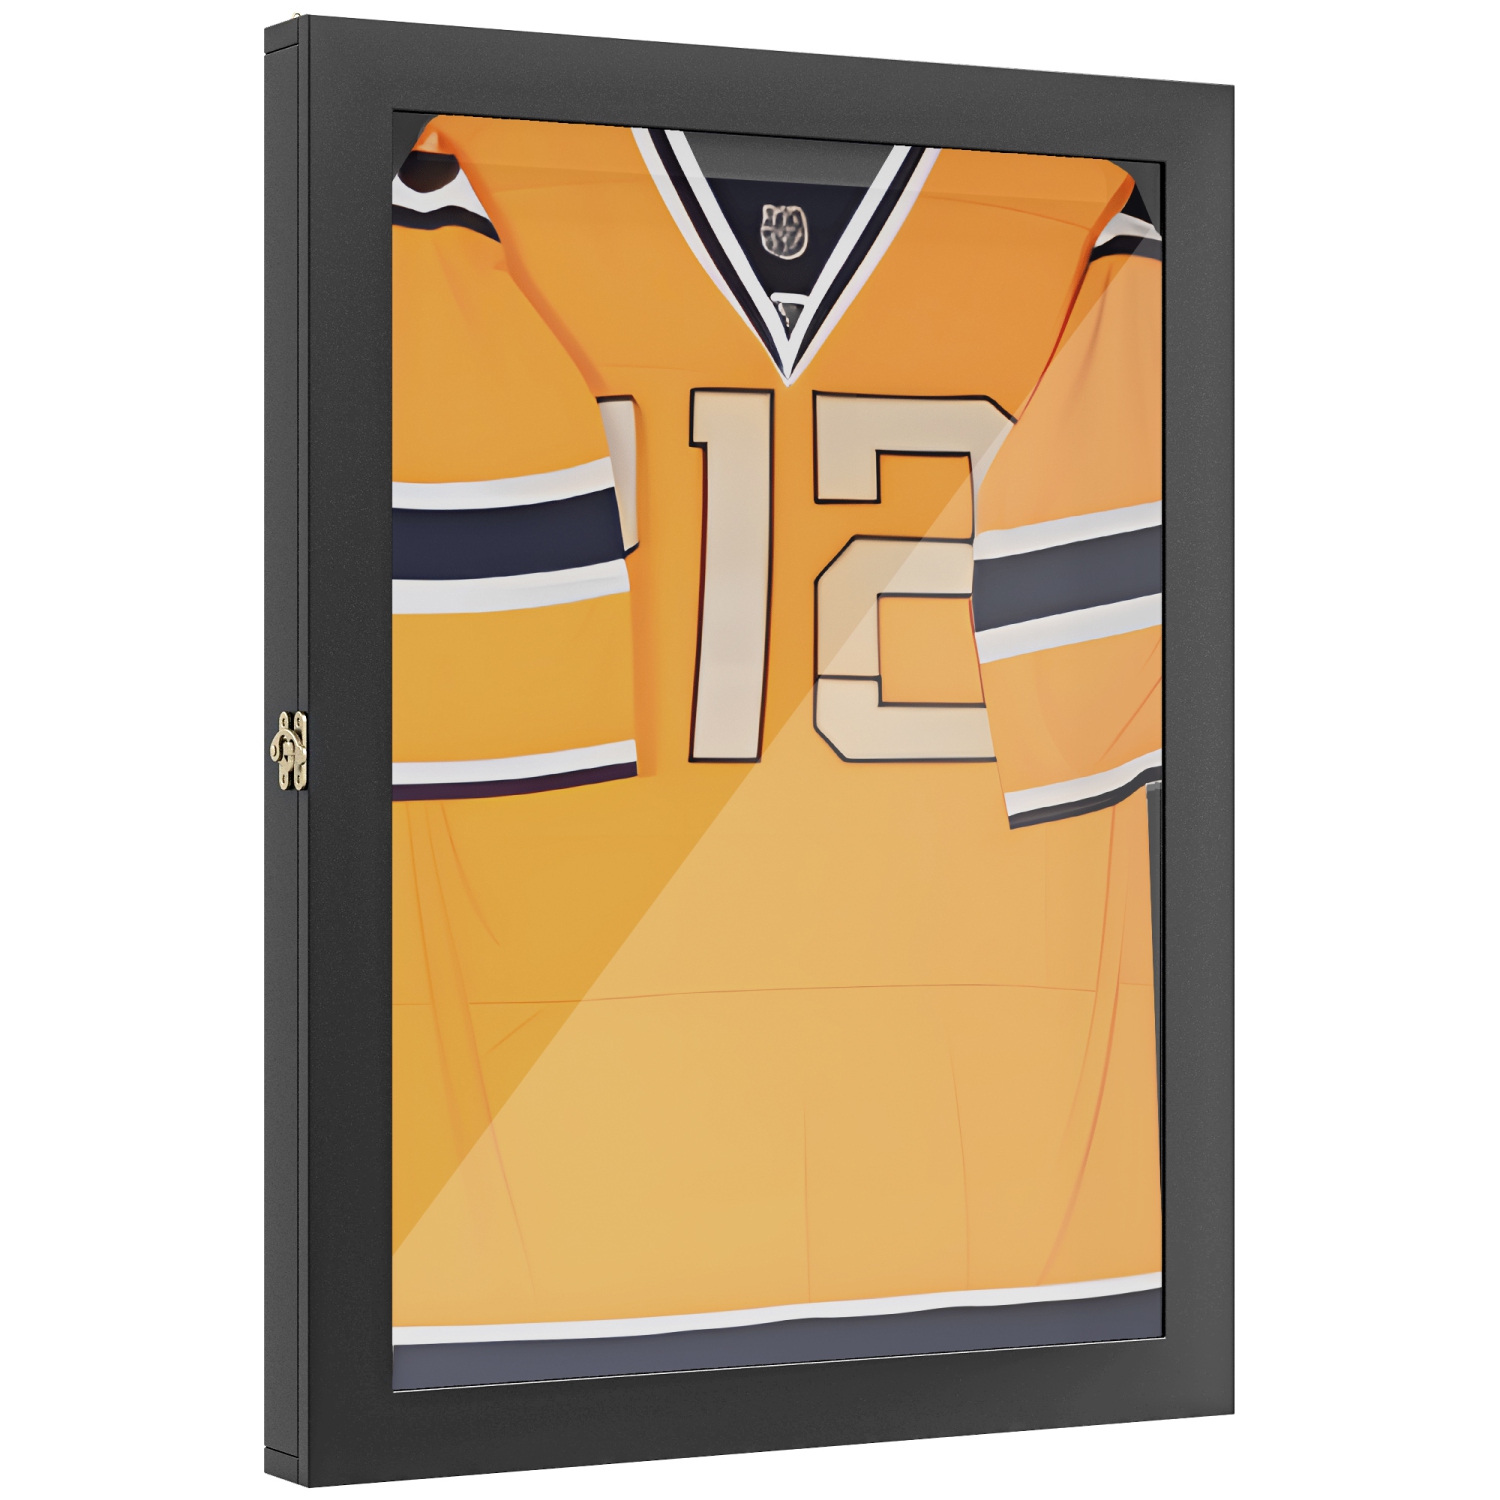 HOMCOM Jersey Display Frame Case, Acrylic Sports Shirt Shadow Box for Basketball Football Baseball, 24" x 32", Black